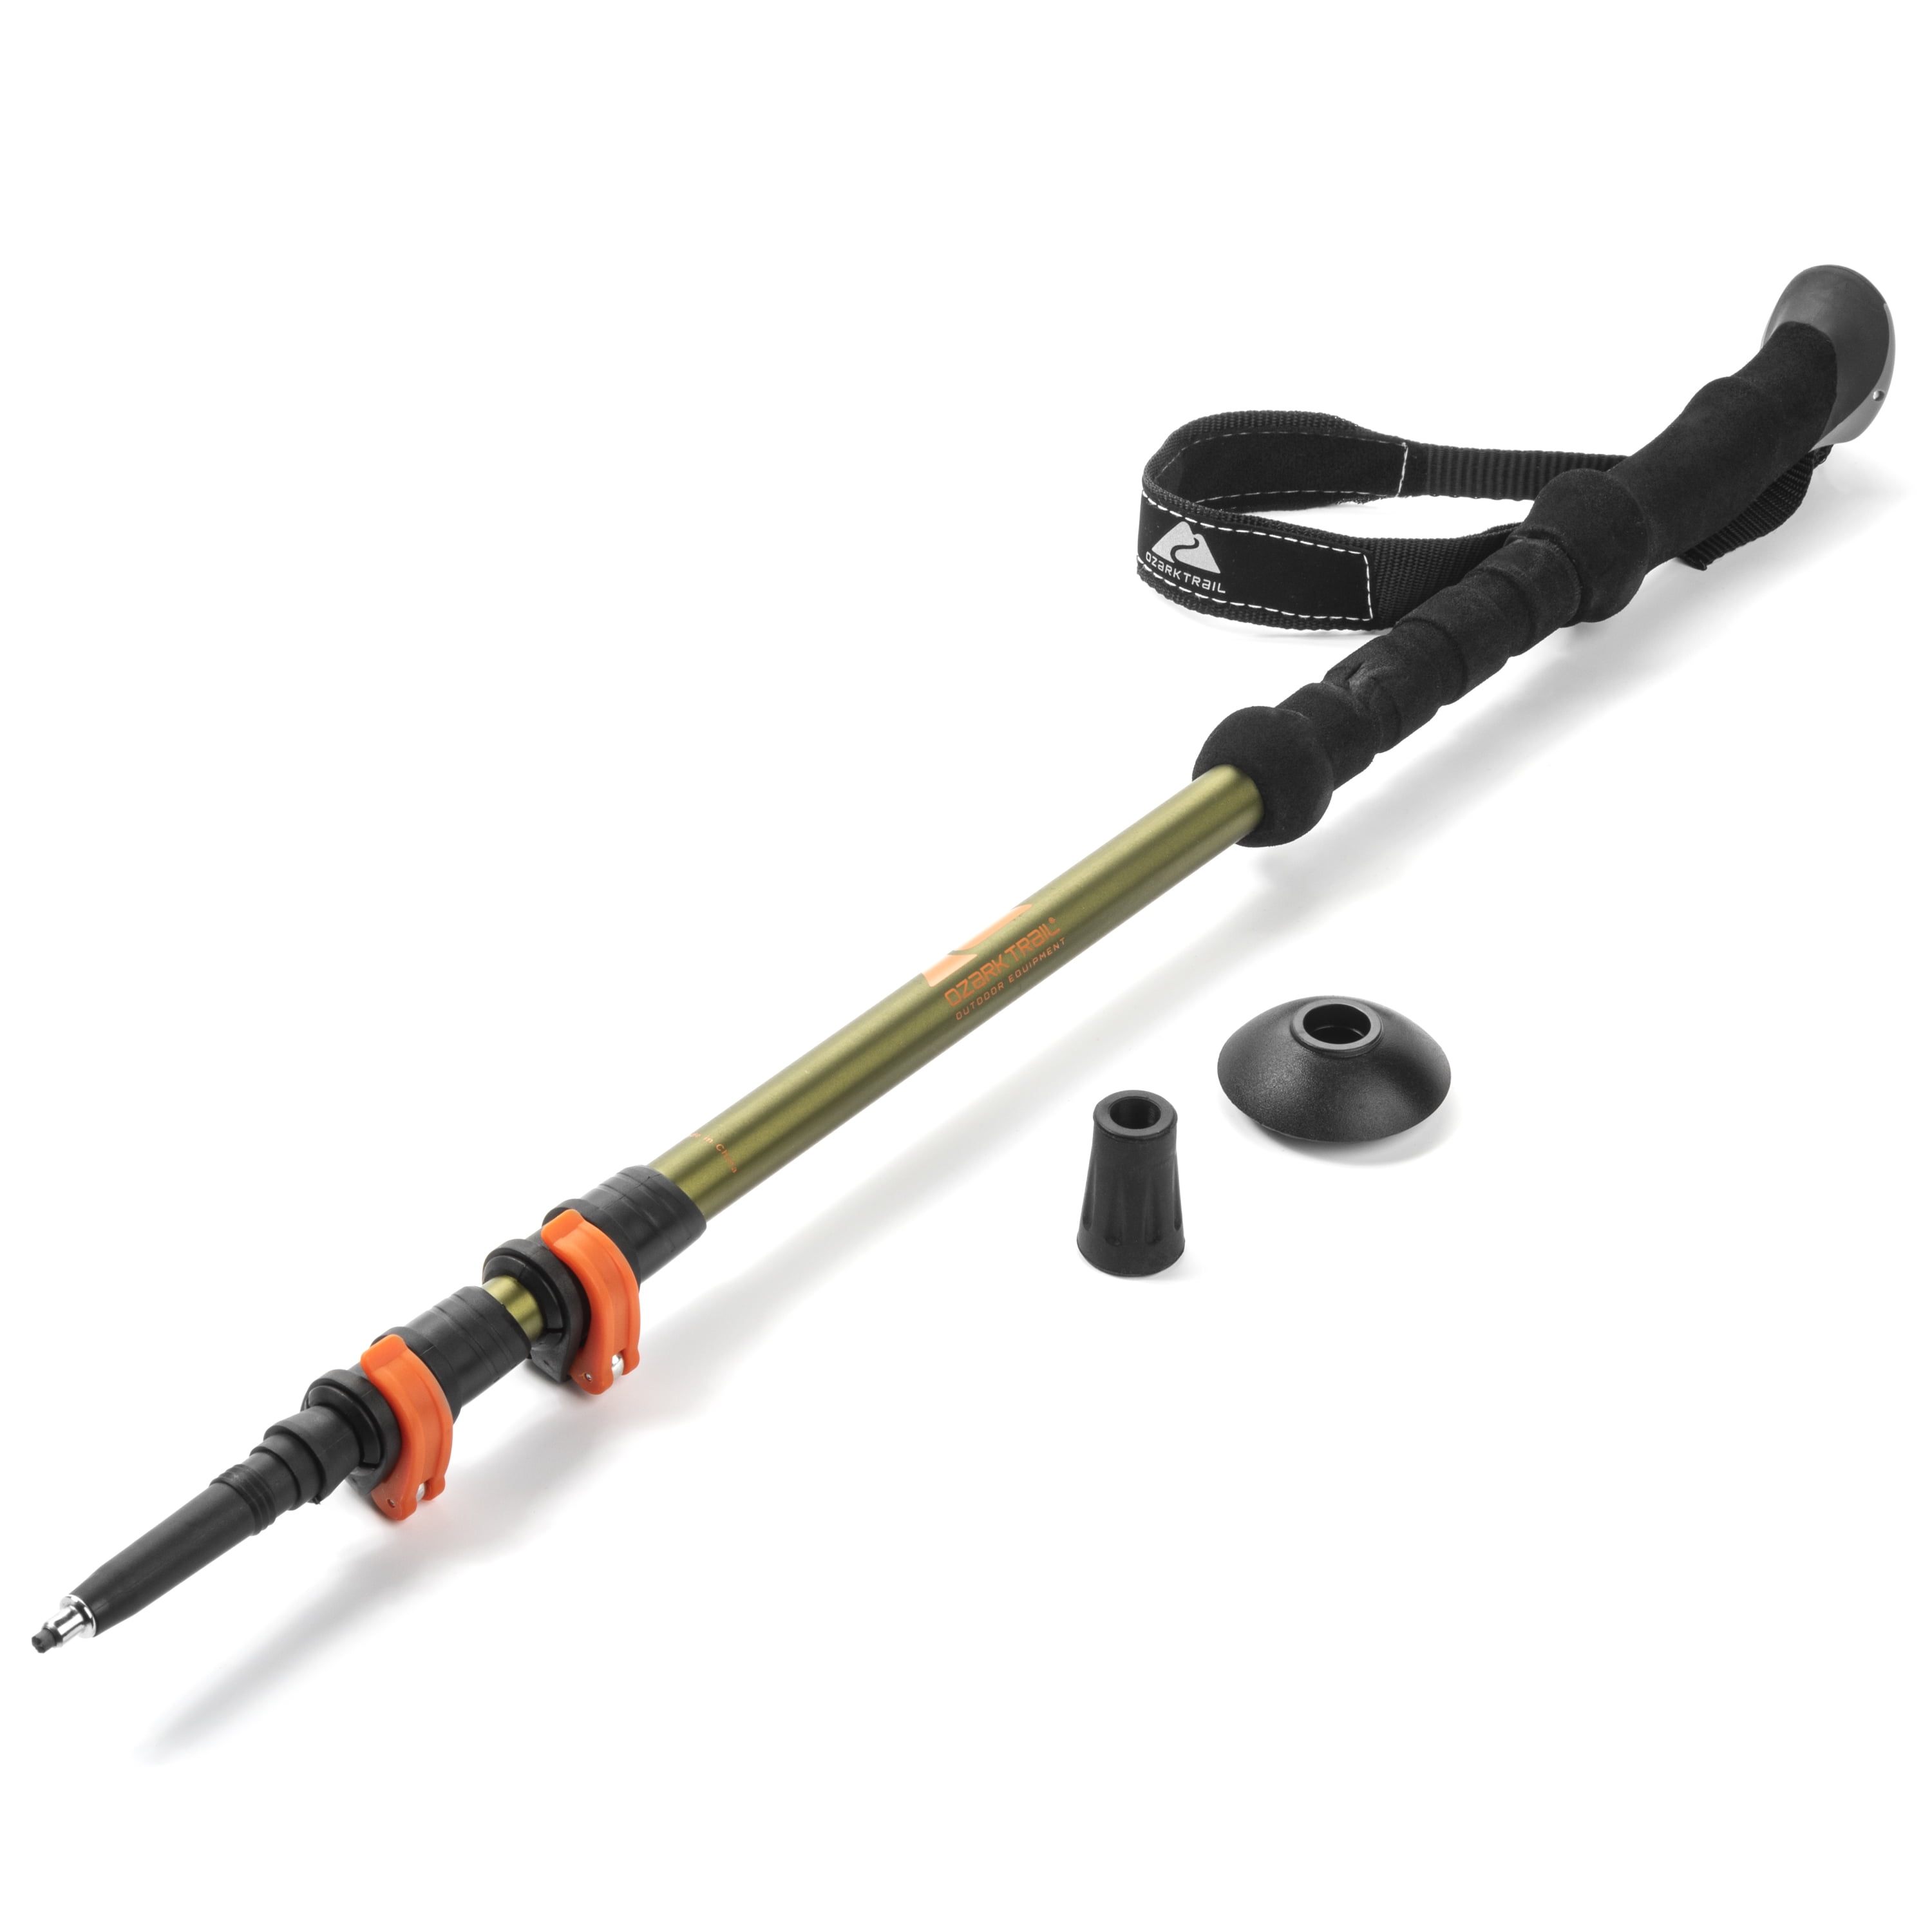 Ozark Trail Brand Aluminum Adustable Quick Lock Trekking Pole with EVA Grip  - 1 Pack